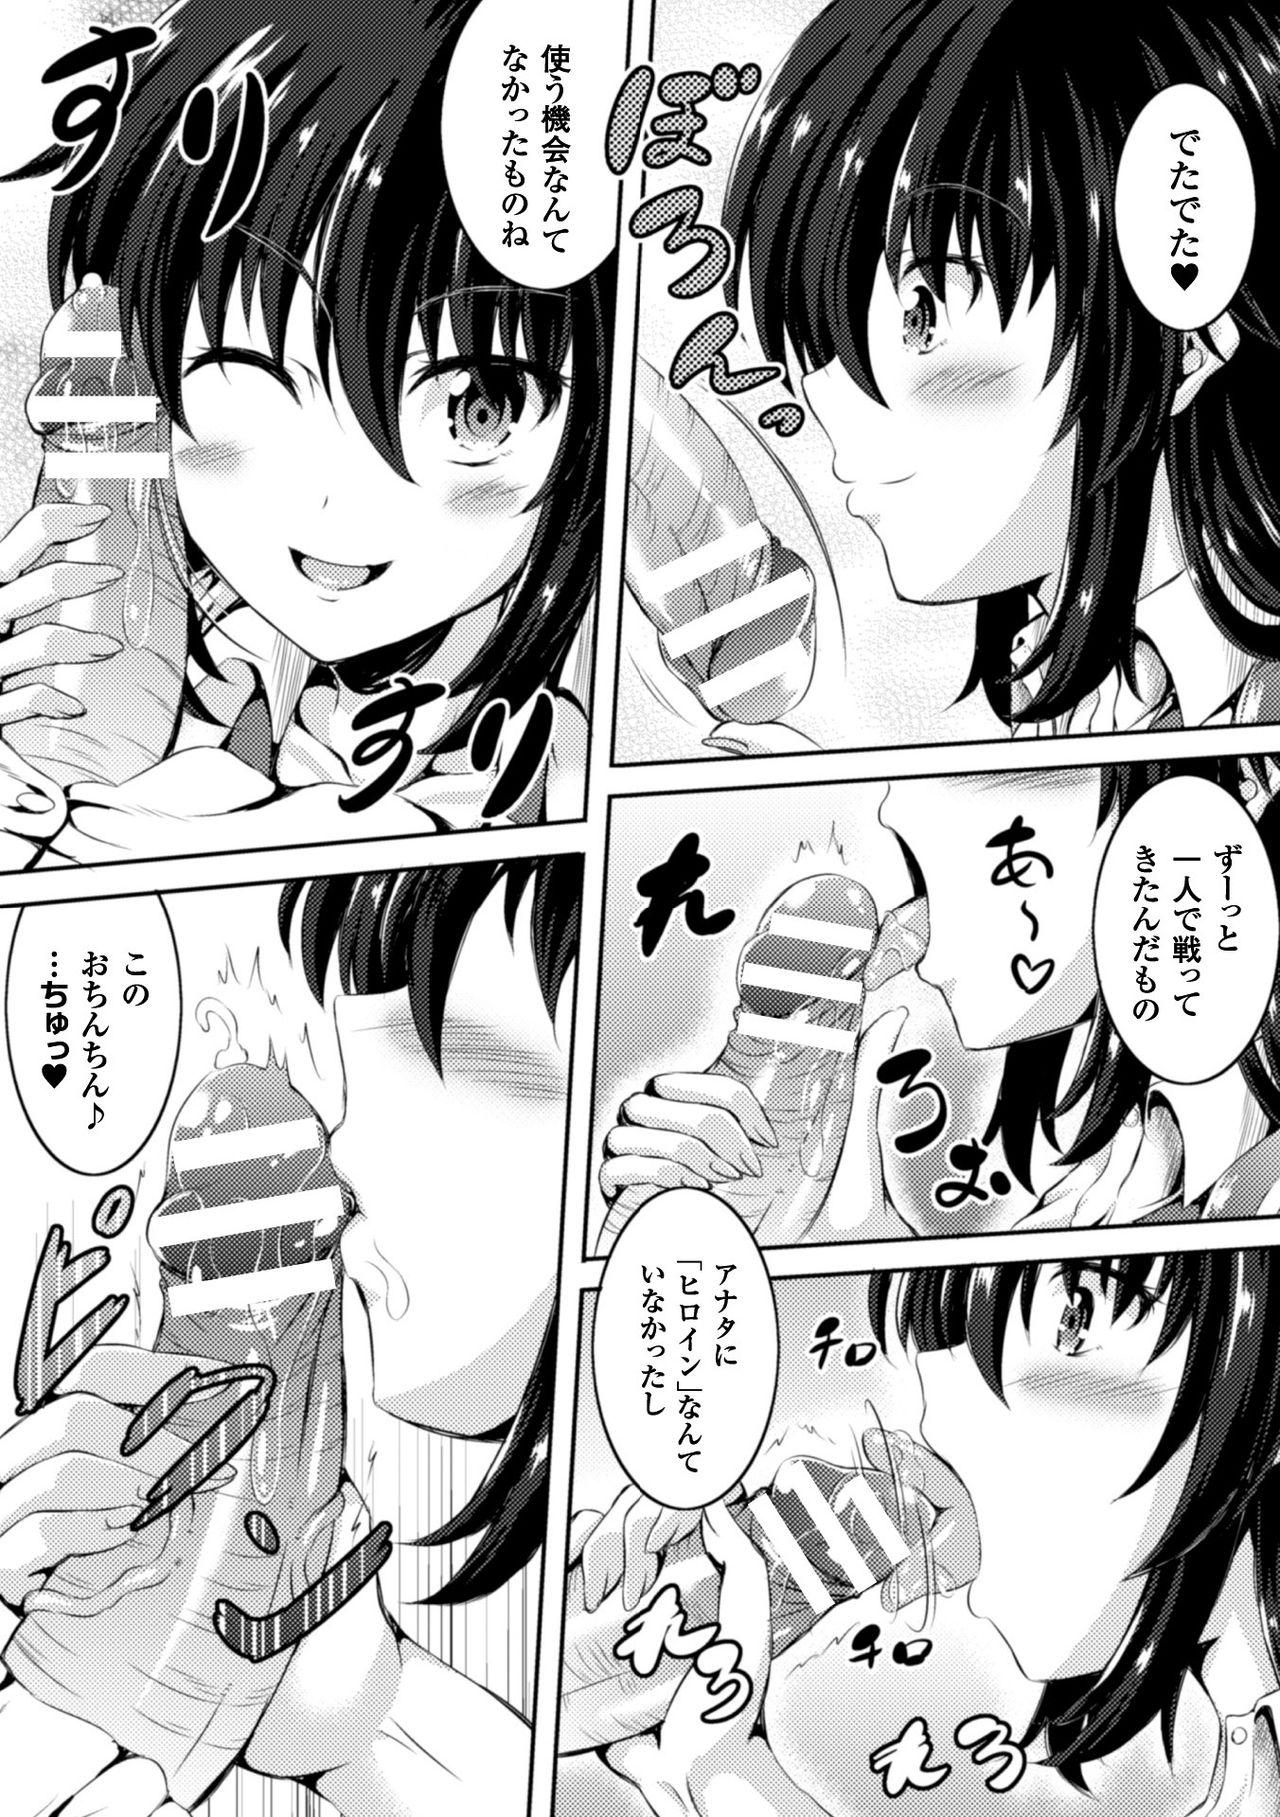 Fisting 2D Comic Magazine TS Jibun Heroine mou Hitori no Ore ga Erosugite Gaman Dekinee! Vol. 1 Bubblebutt - Page 7